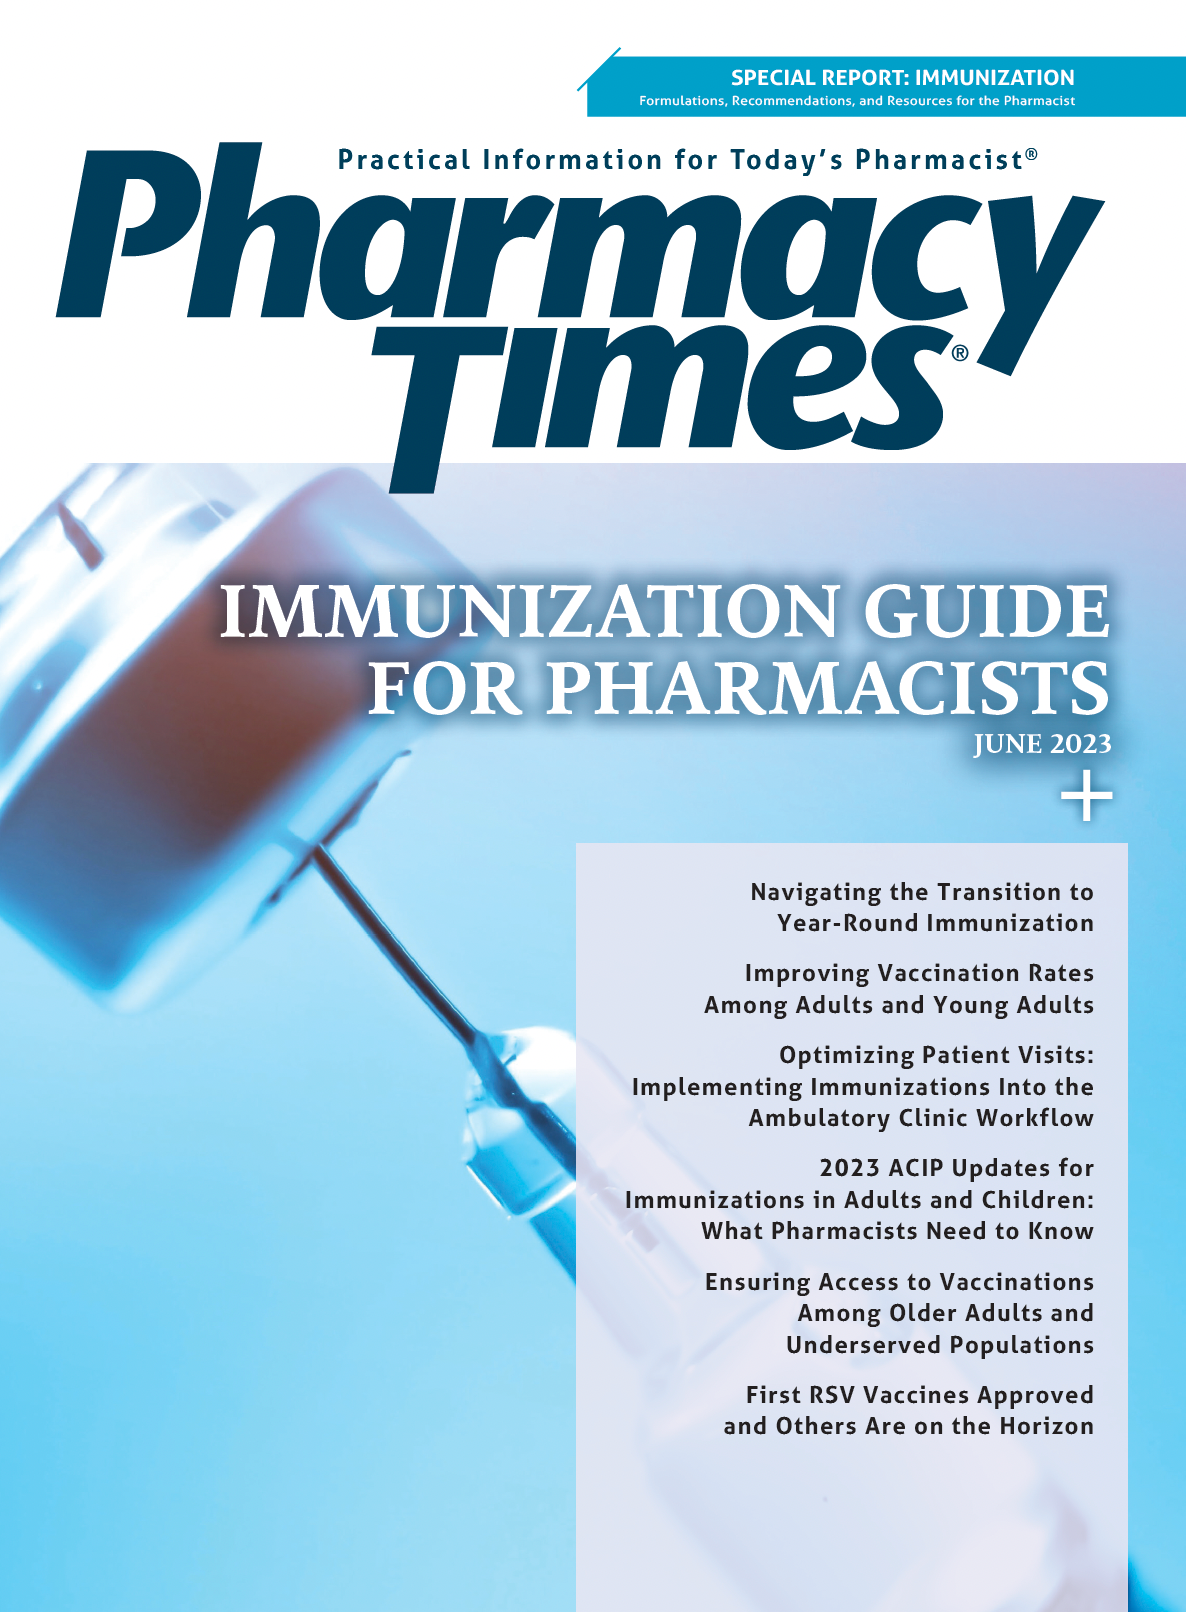 June 2023 Immunization Guide for Pharmacists